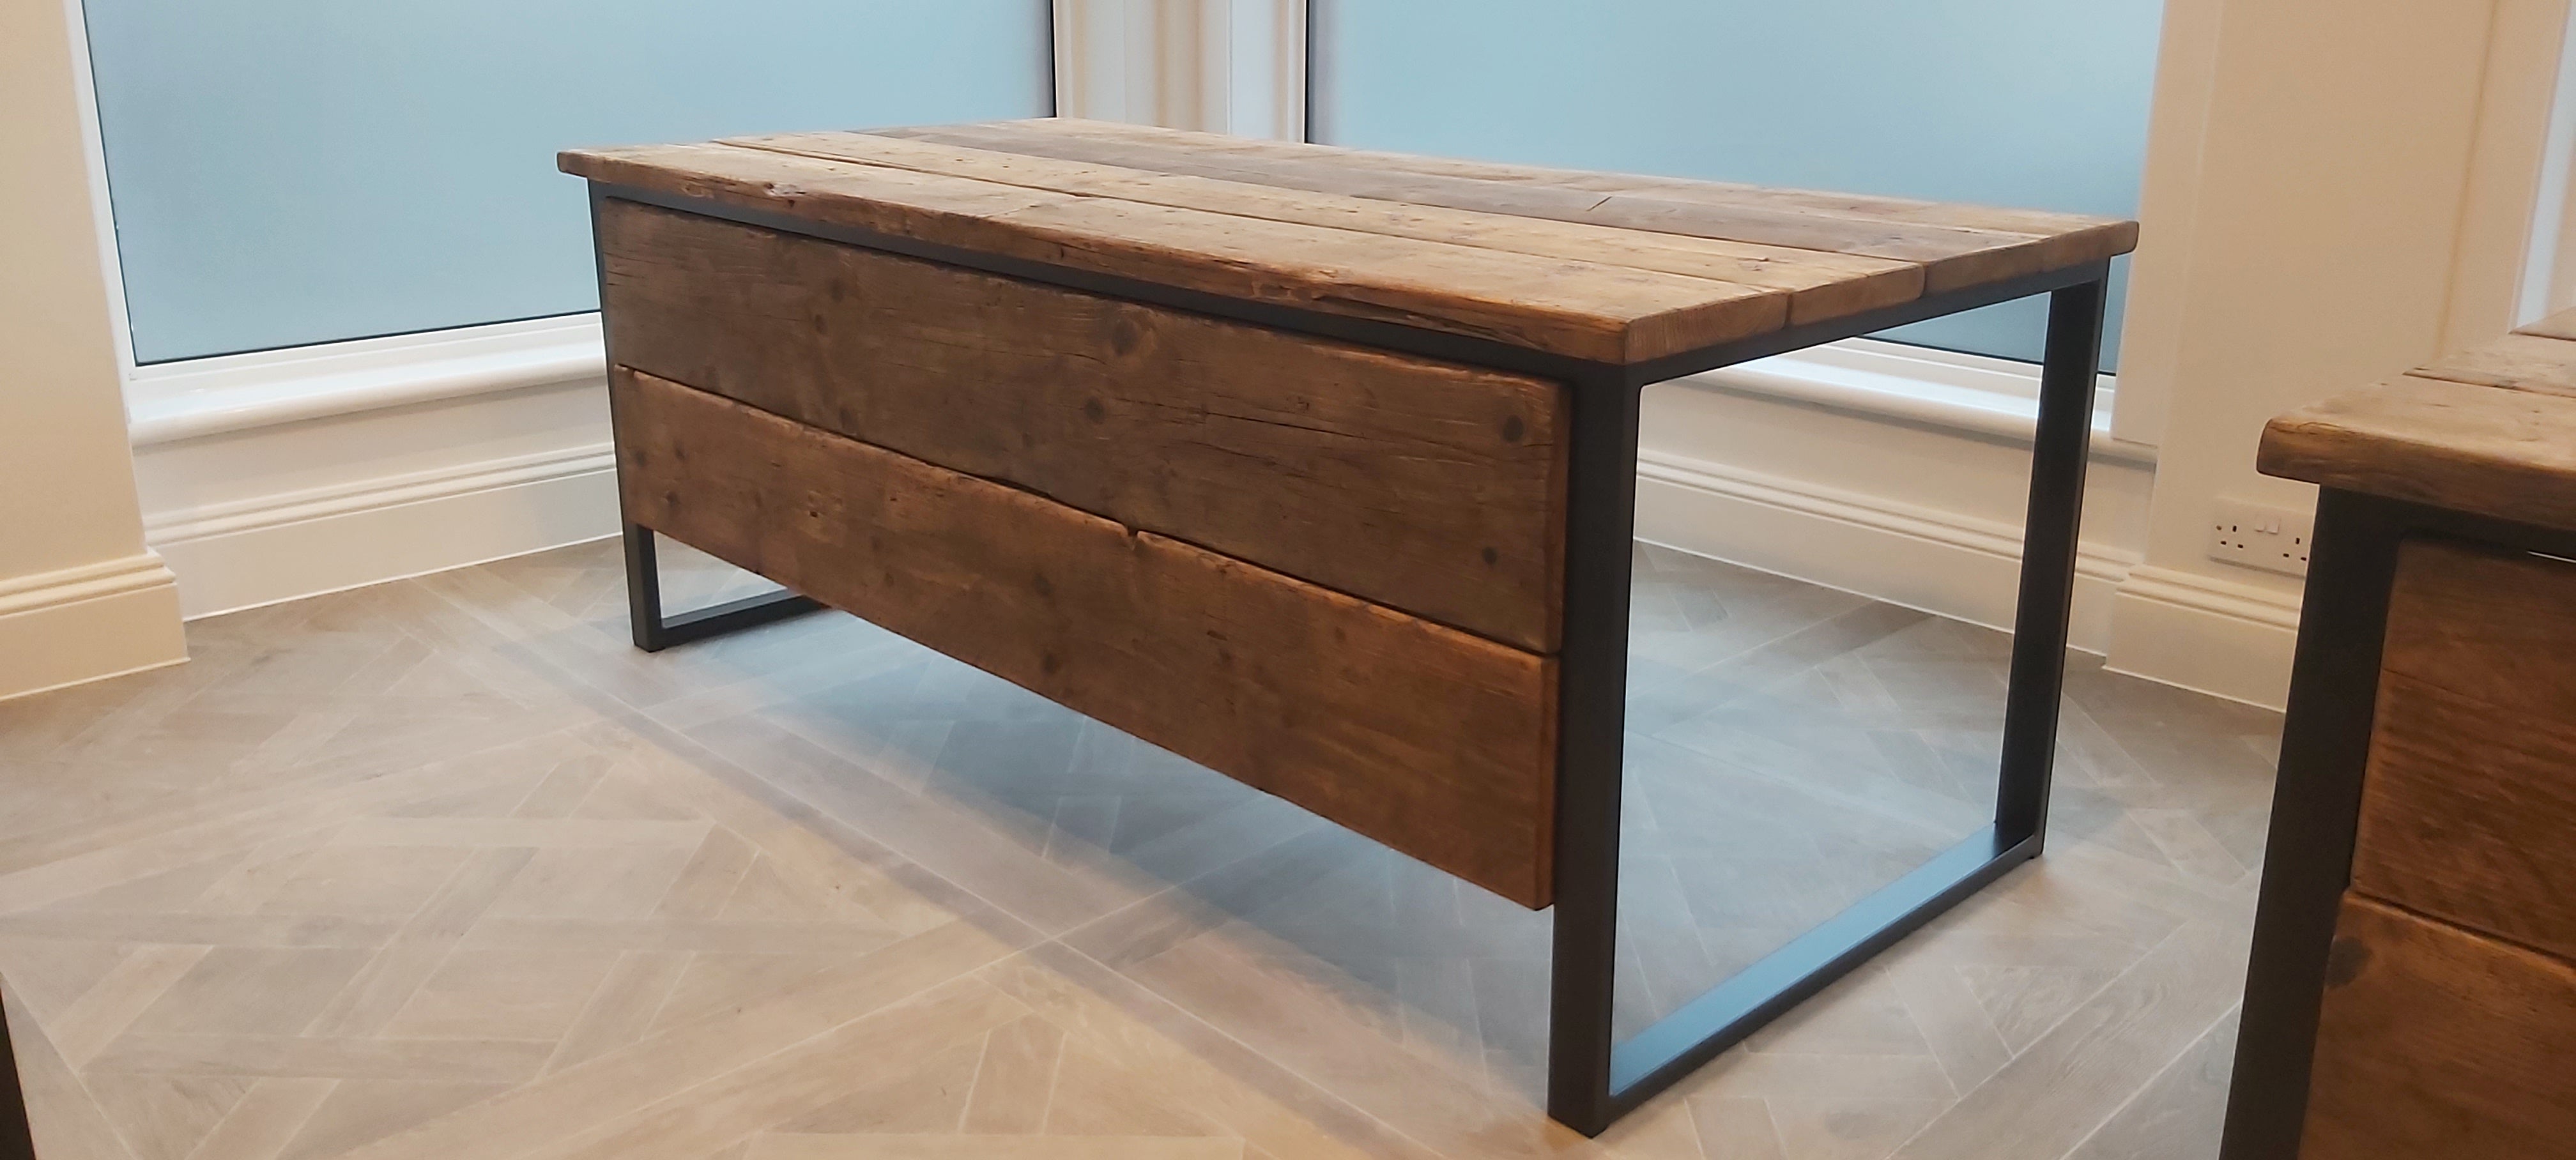 Buy Rustic Desk With A Frame Legs WFH Industrial Desk Scaffold Boards  Reclaimed Wood Home Office Steel Legs Office Desk Wood Desk Online in India  